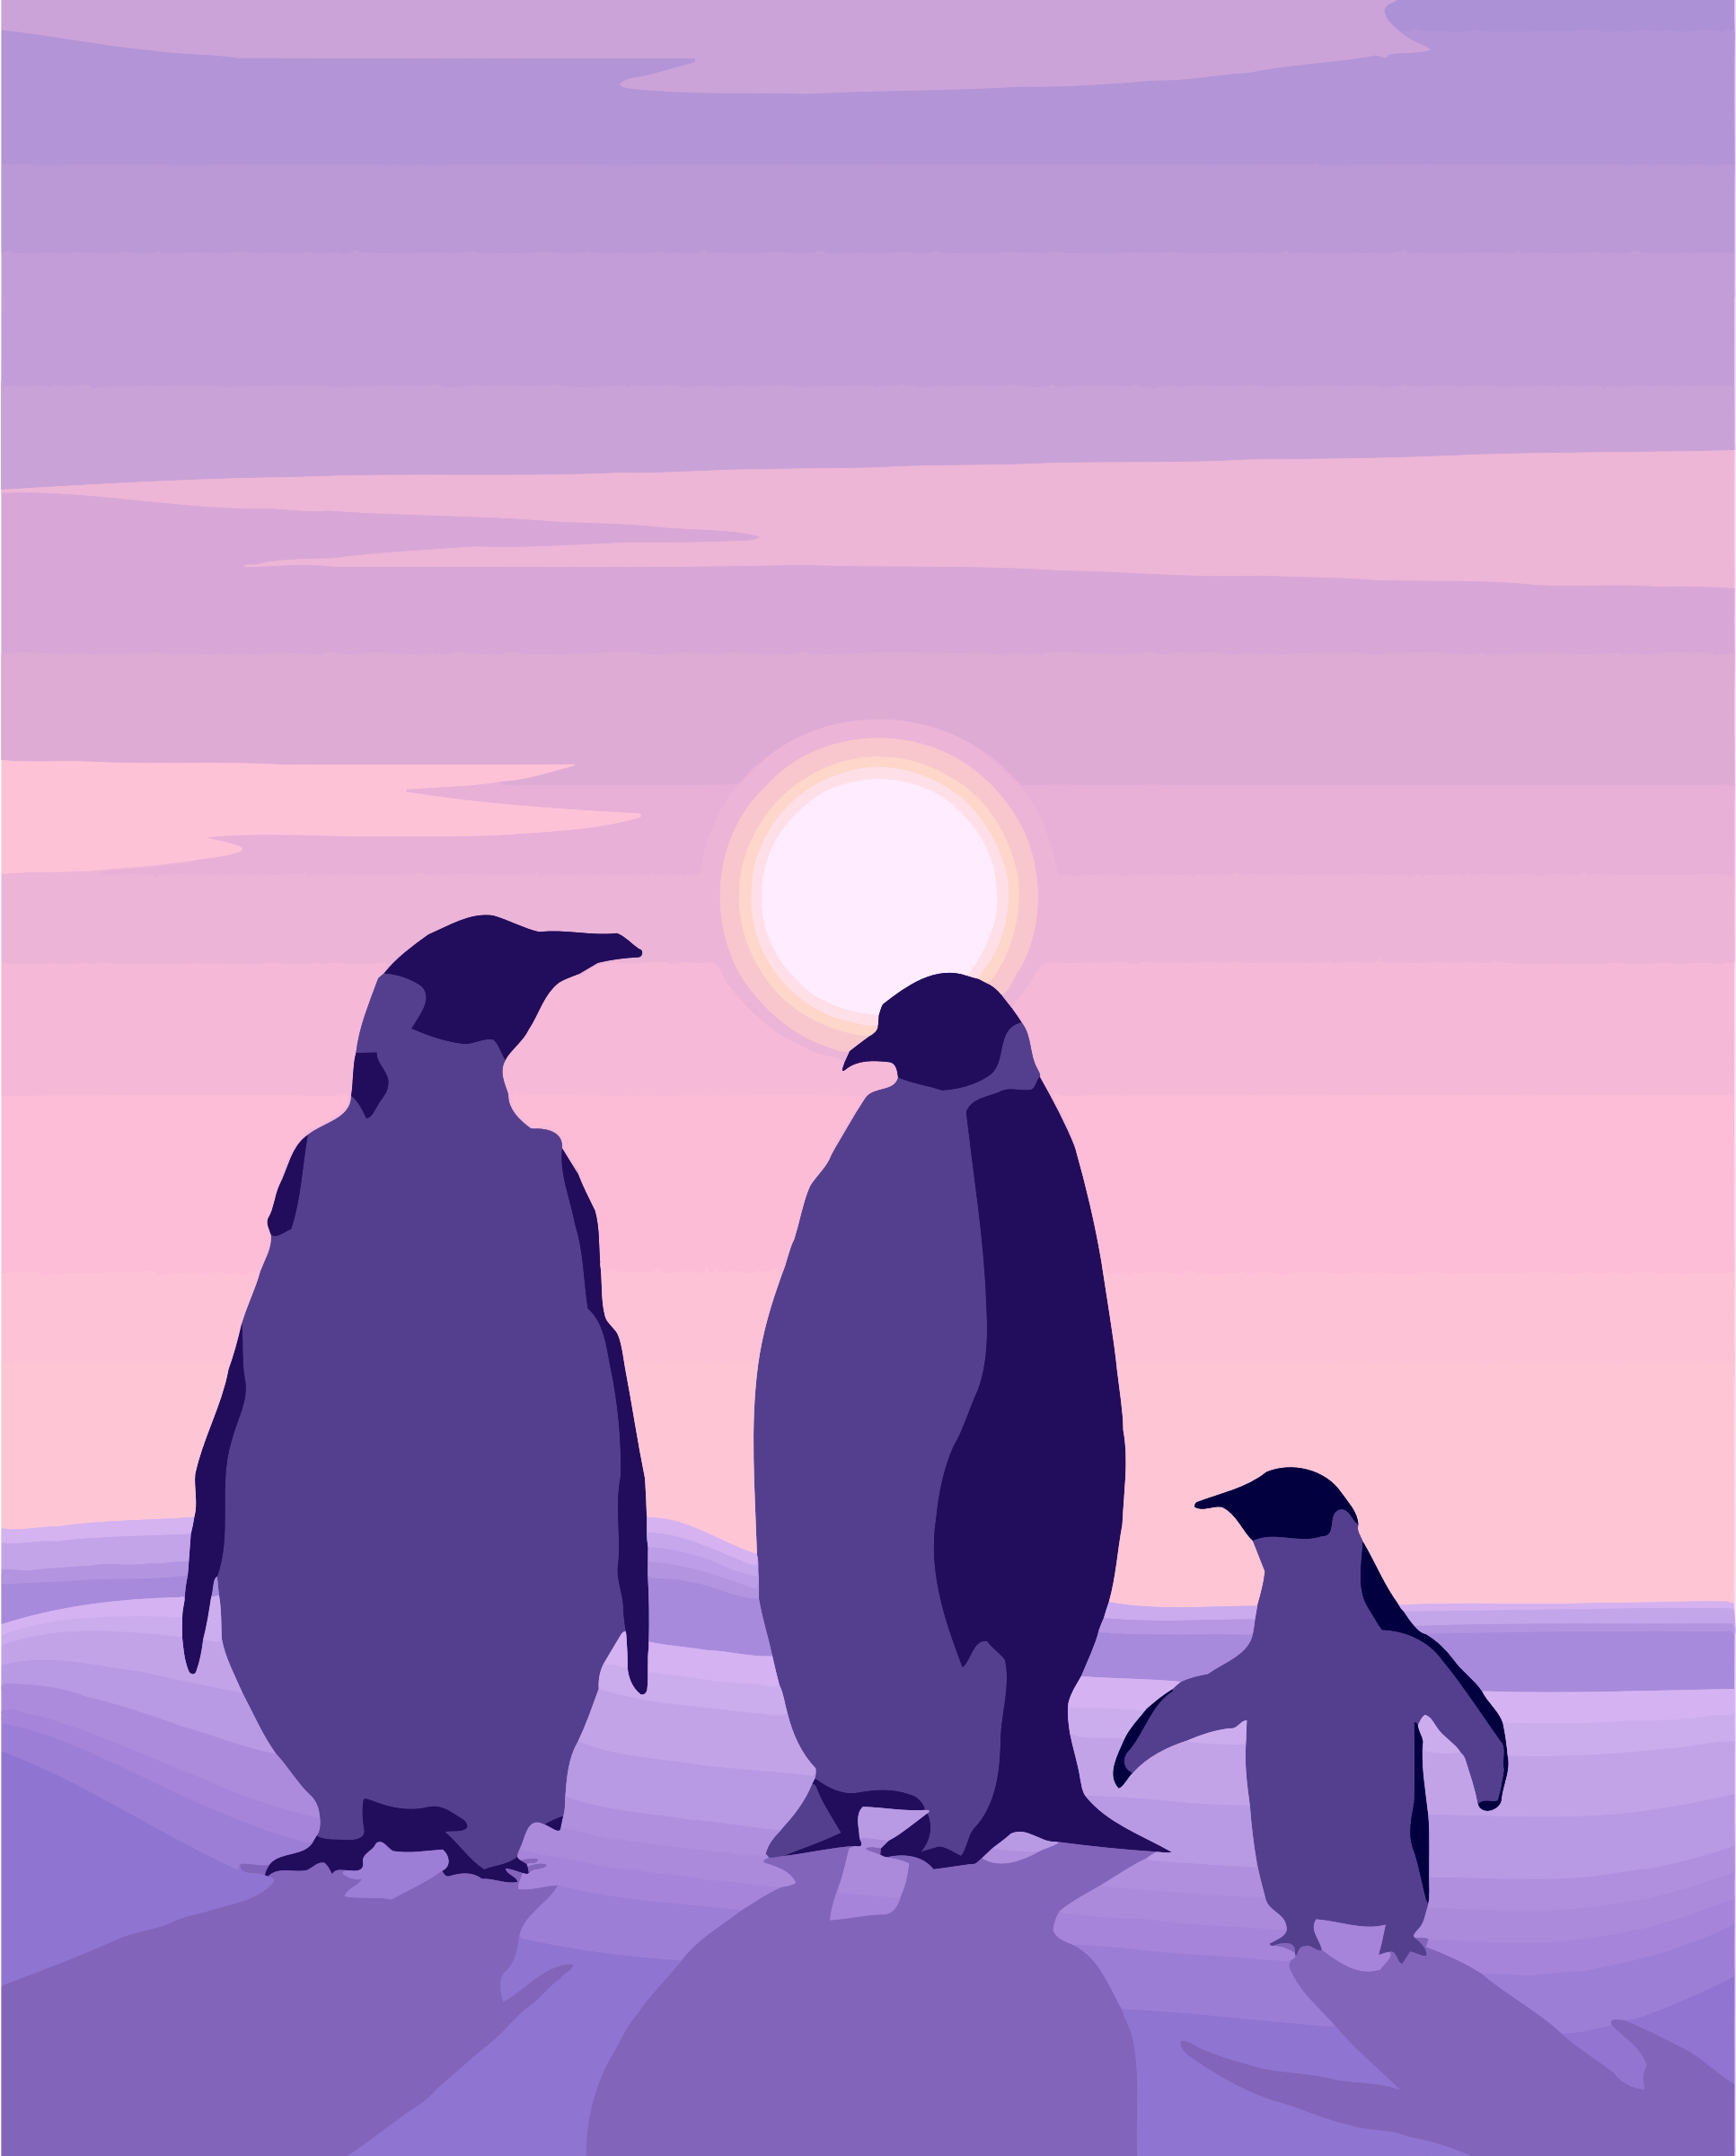 penguins-under-the-purple-sky-vector-clipart.png